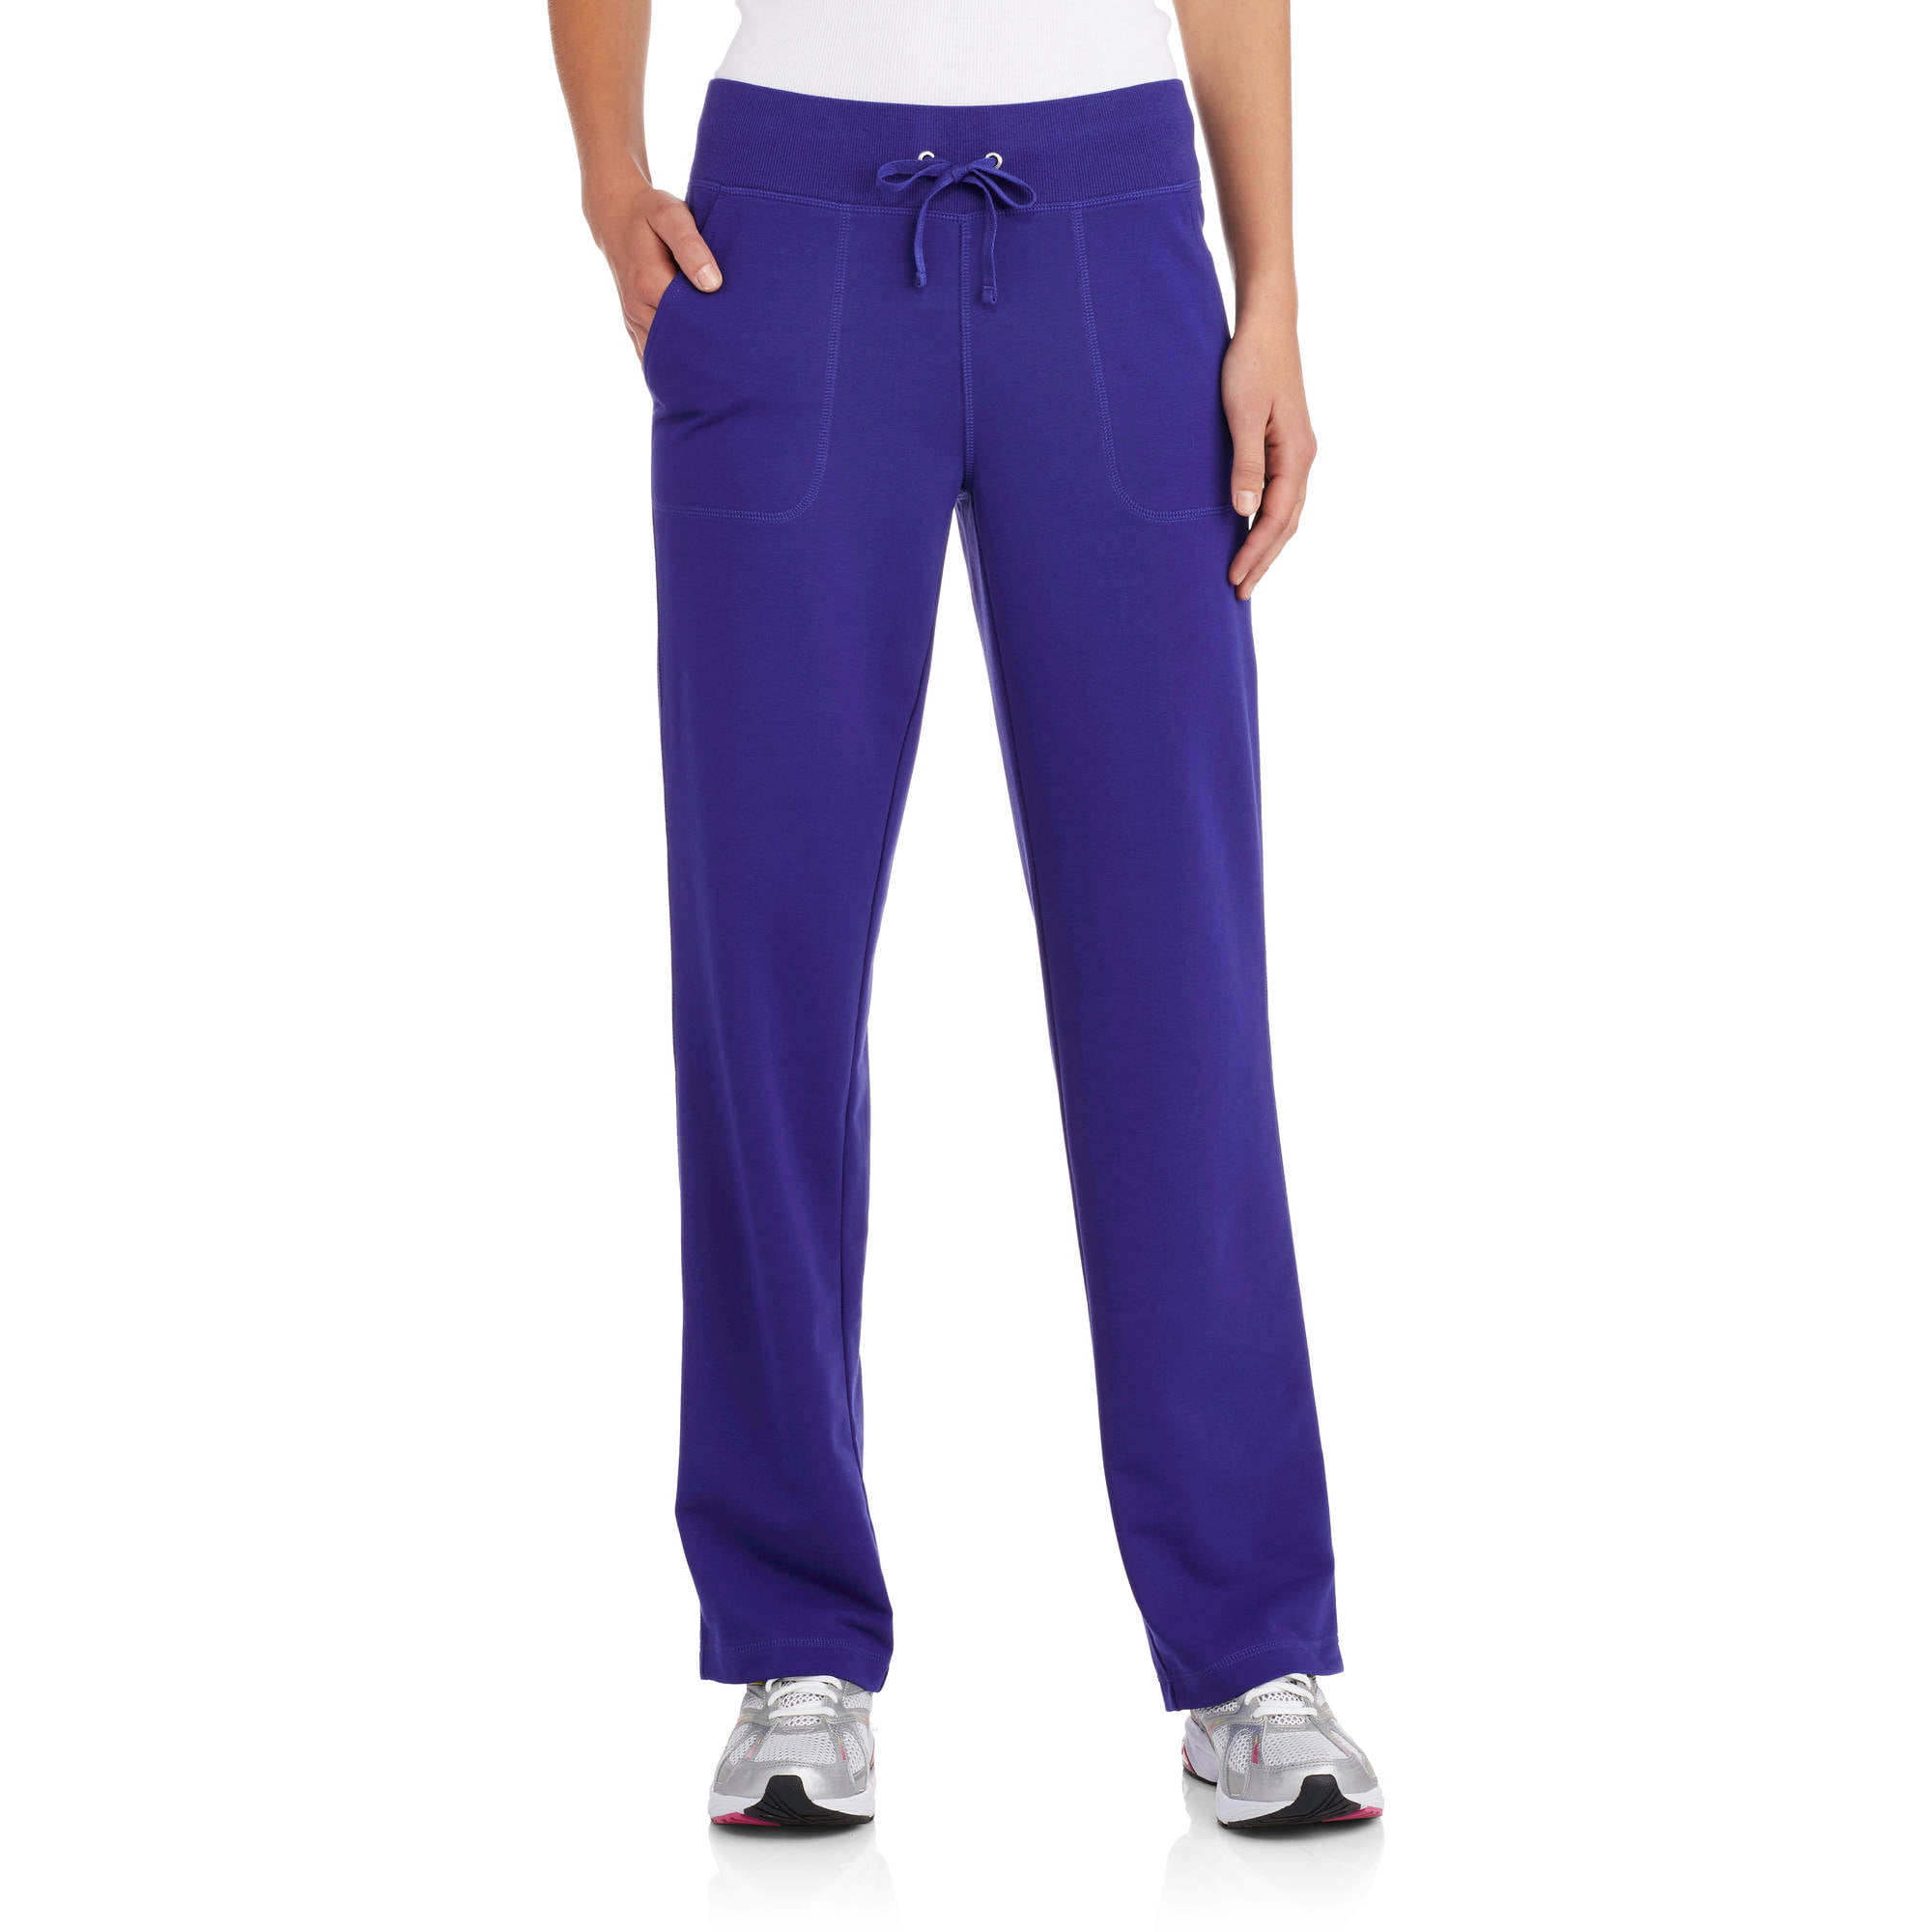 Yoga Pants - Walmart.com